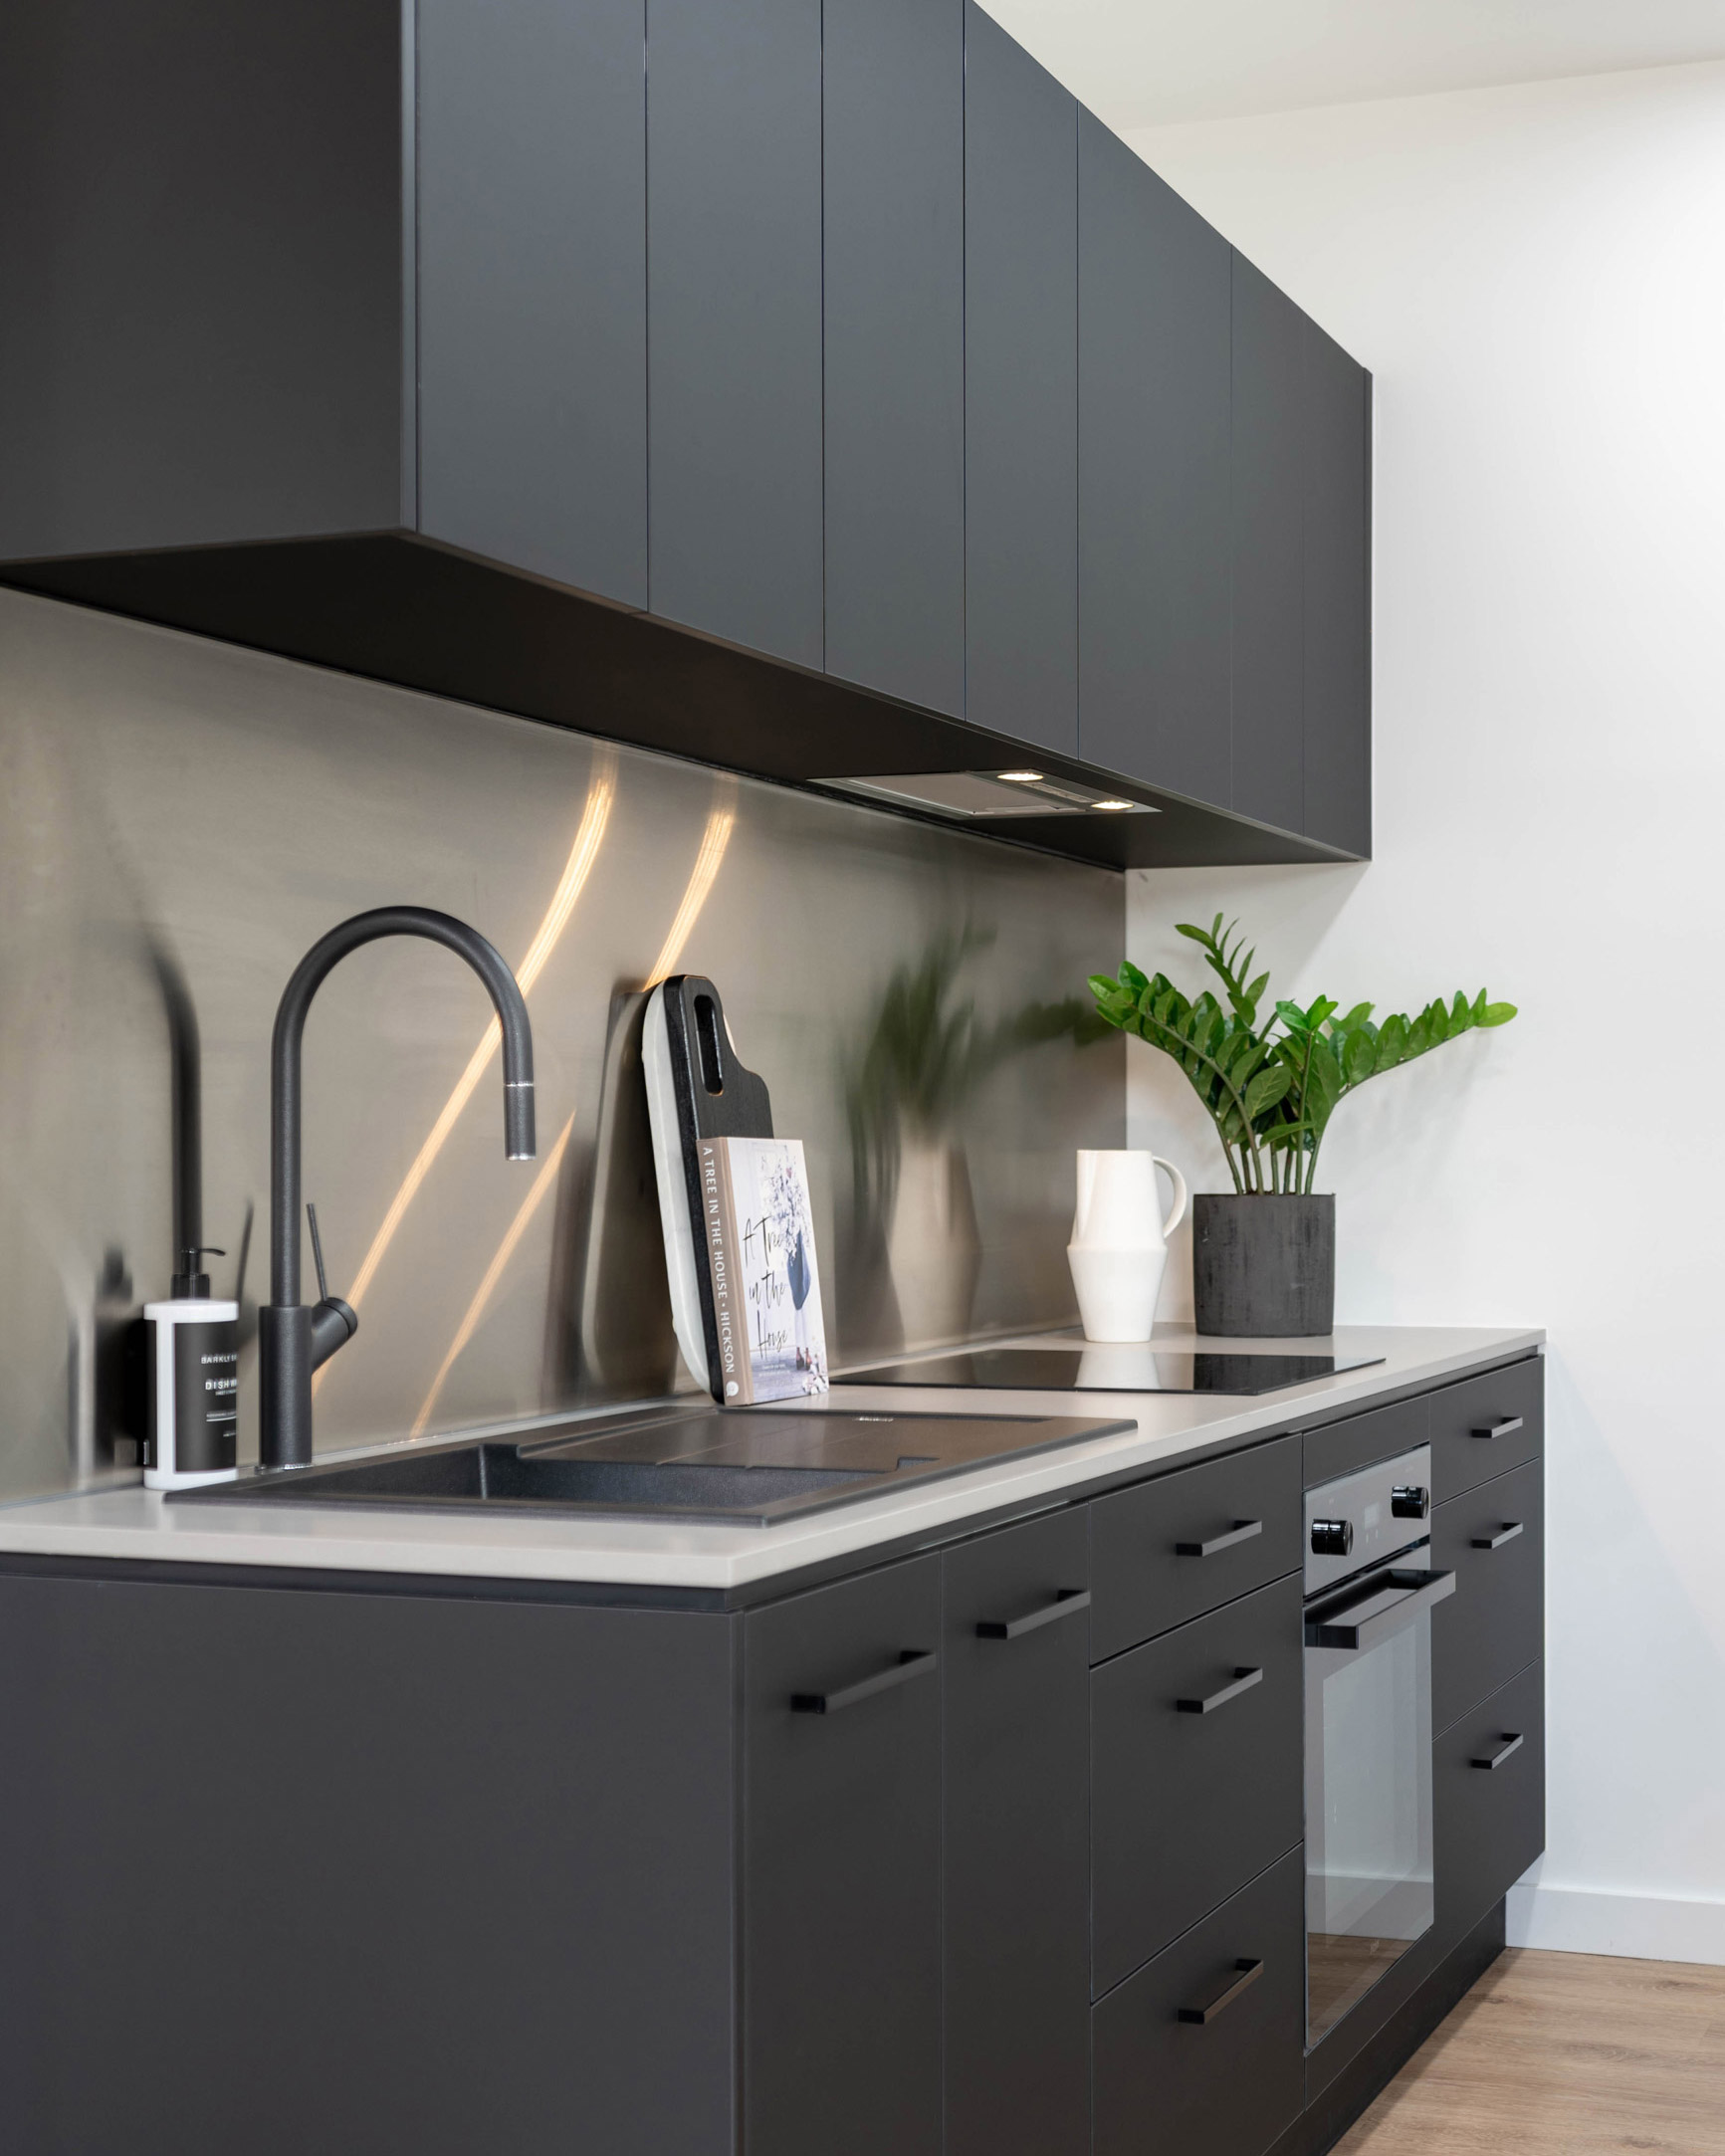 Image of black supermatte kitchen at U-Install-It Kitchens showroom at Glandore. Featuring black kitchen sink & tap, and black handles and black Haier appliances.